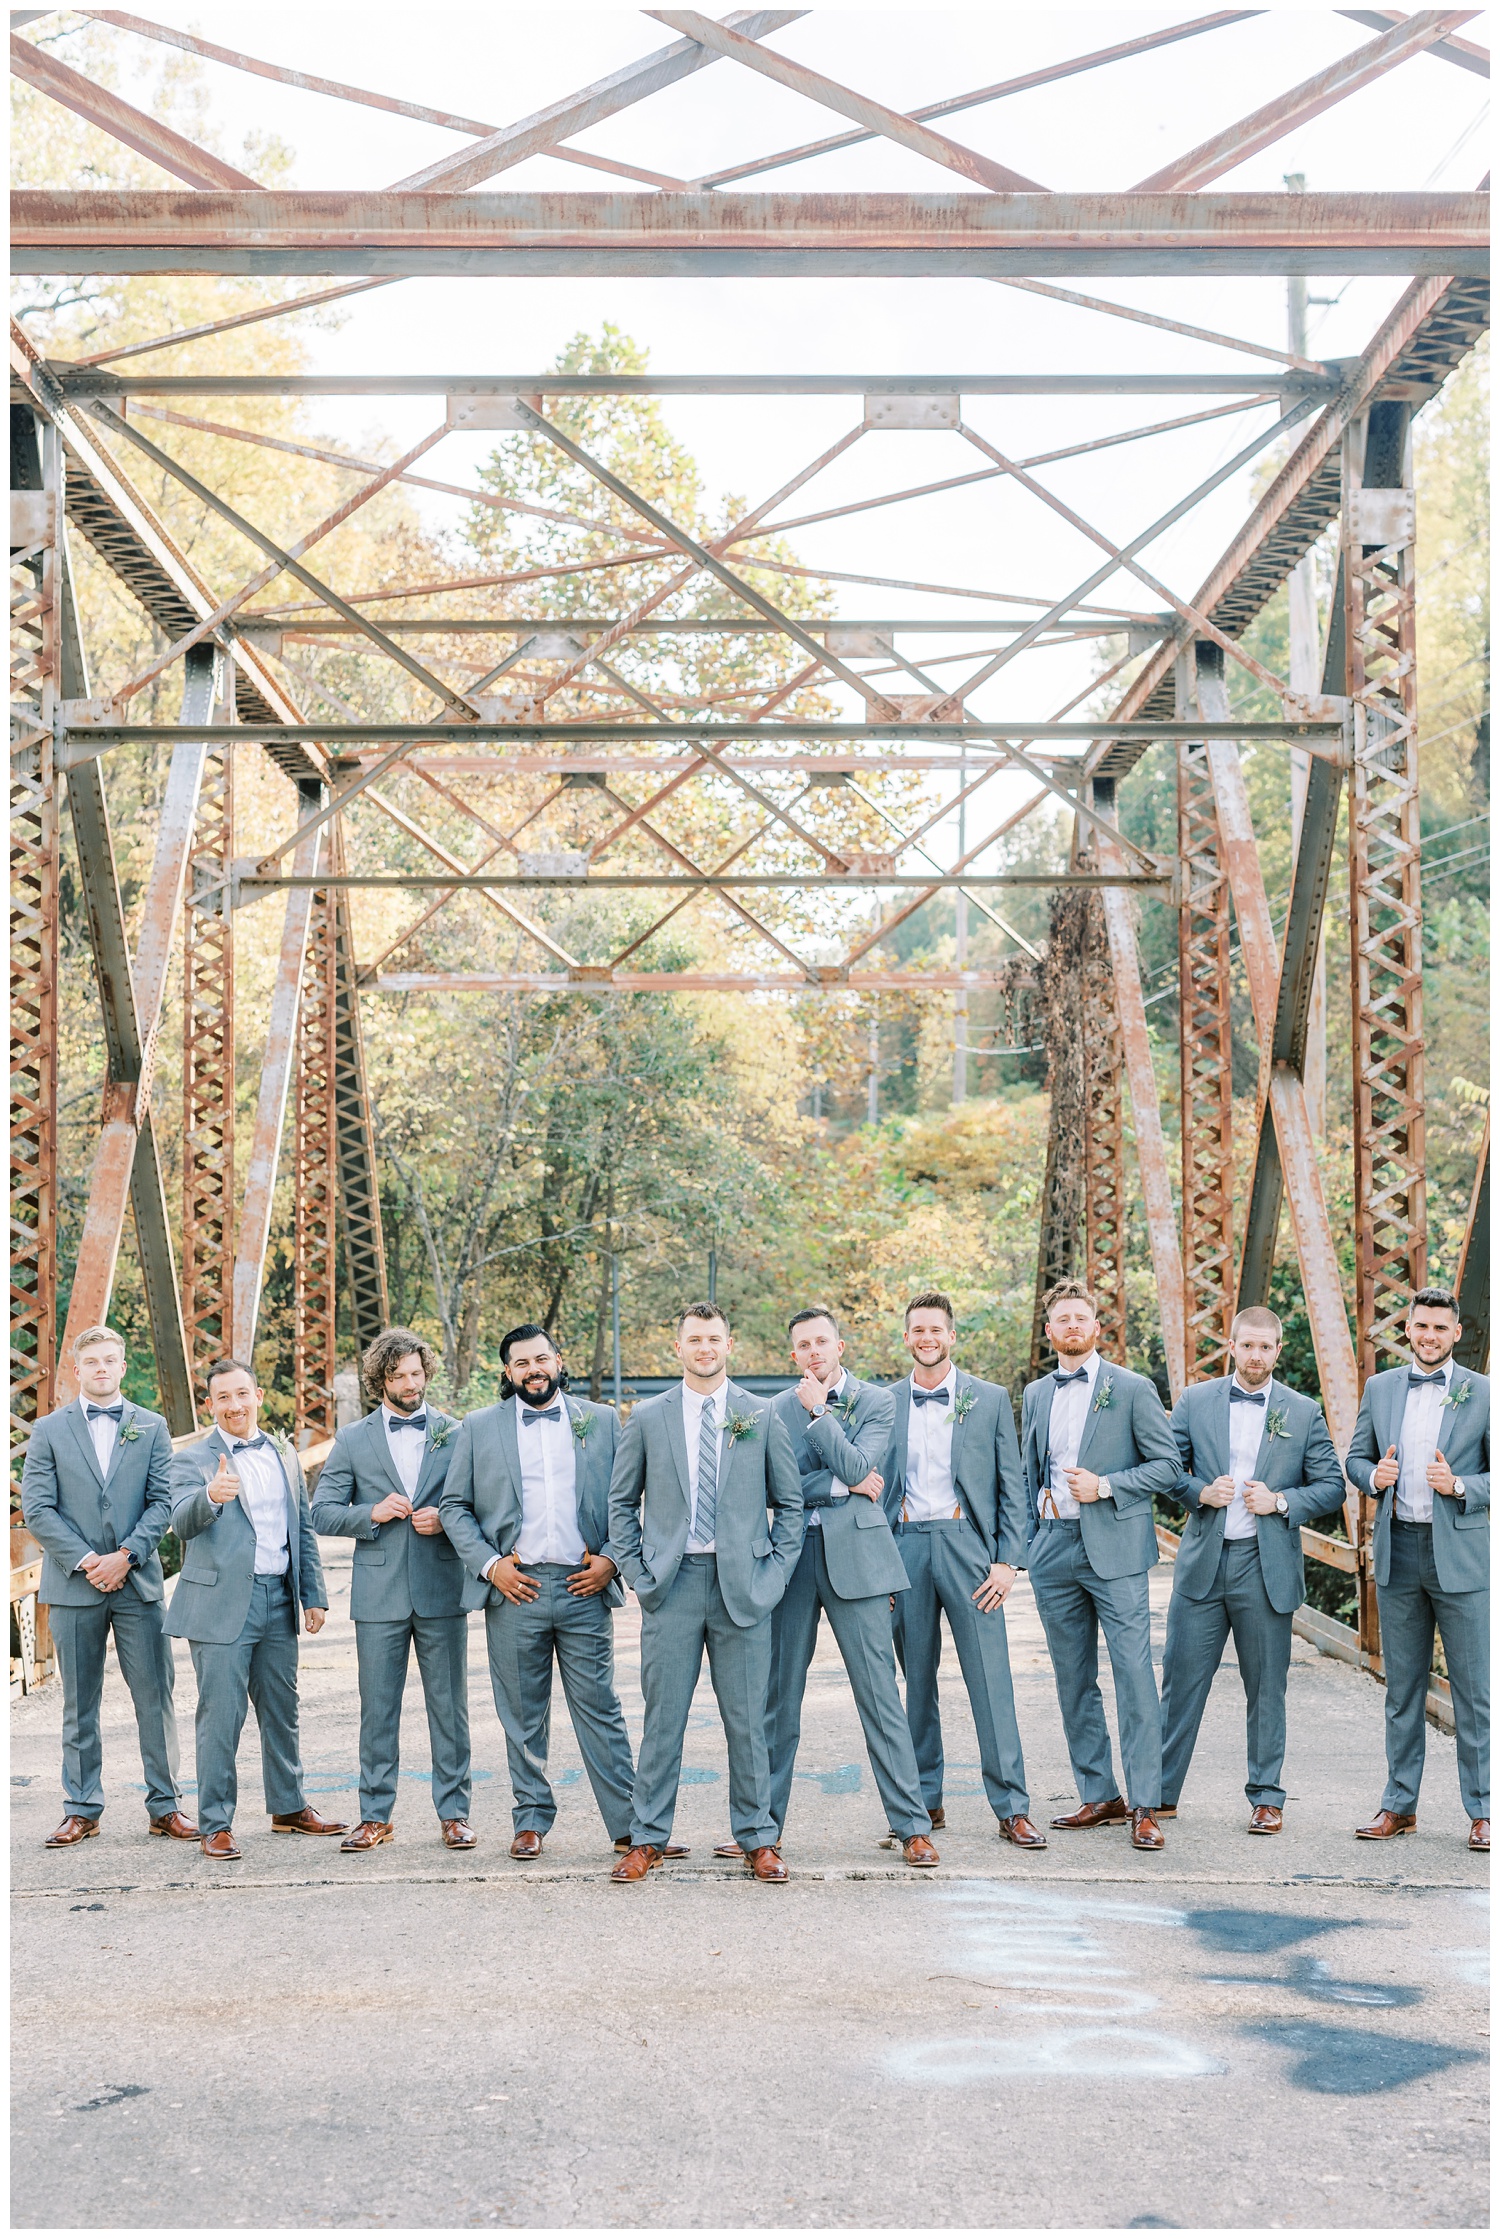 Groom with groomsmen on bridge in Illinois for wedding